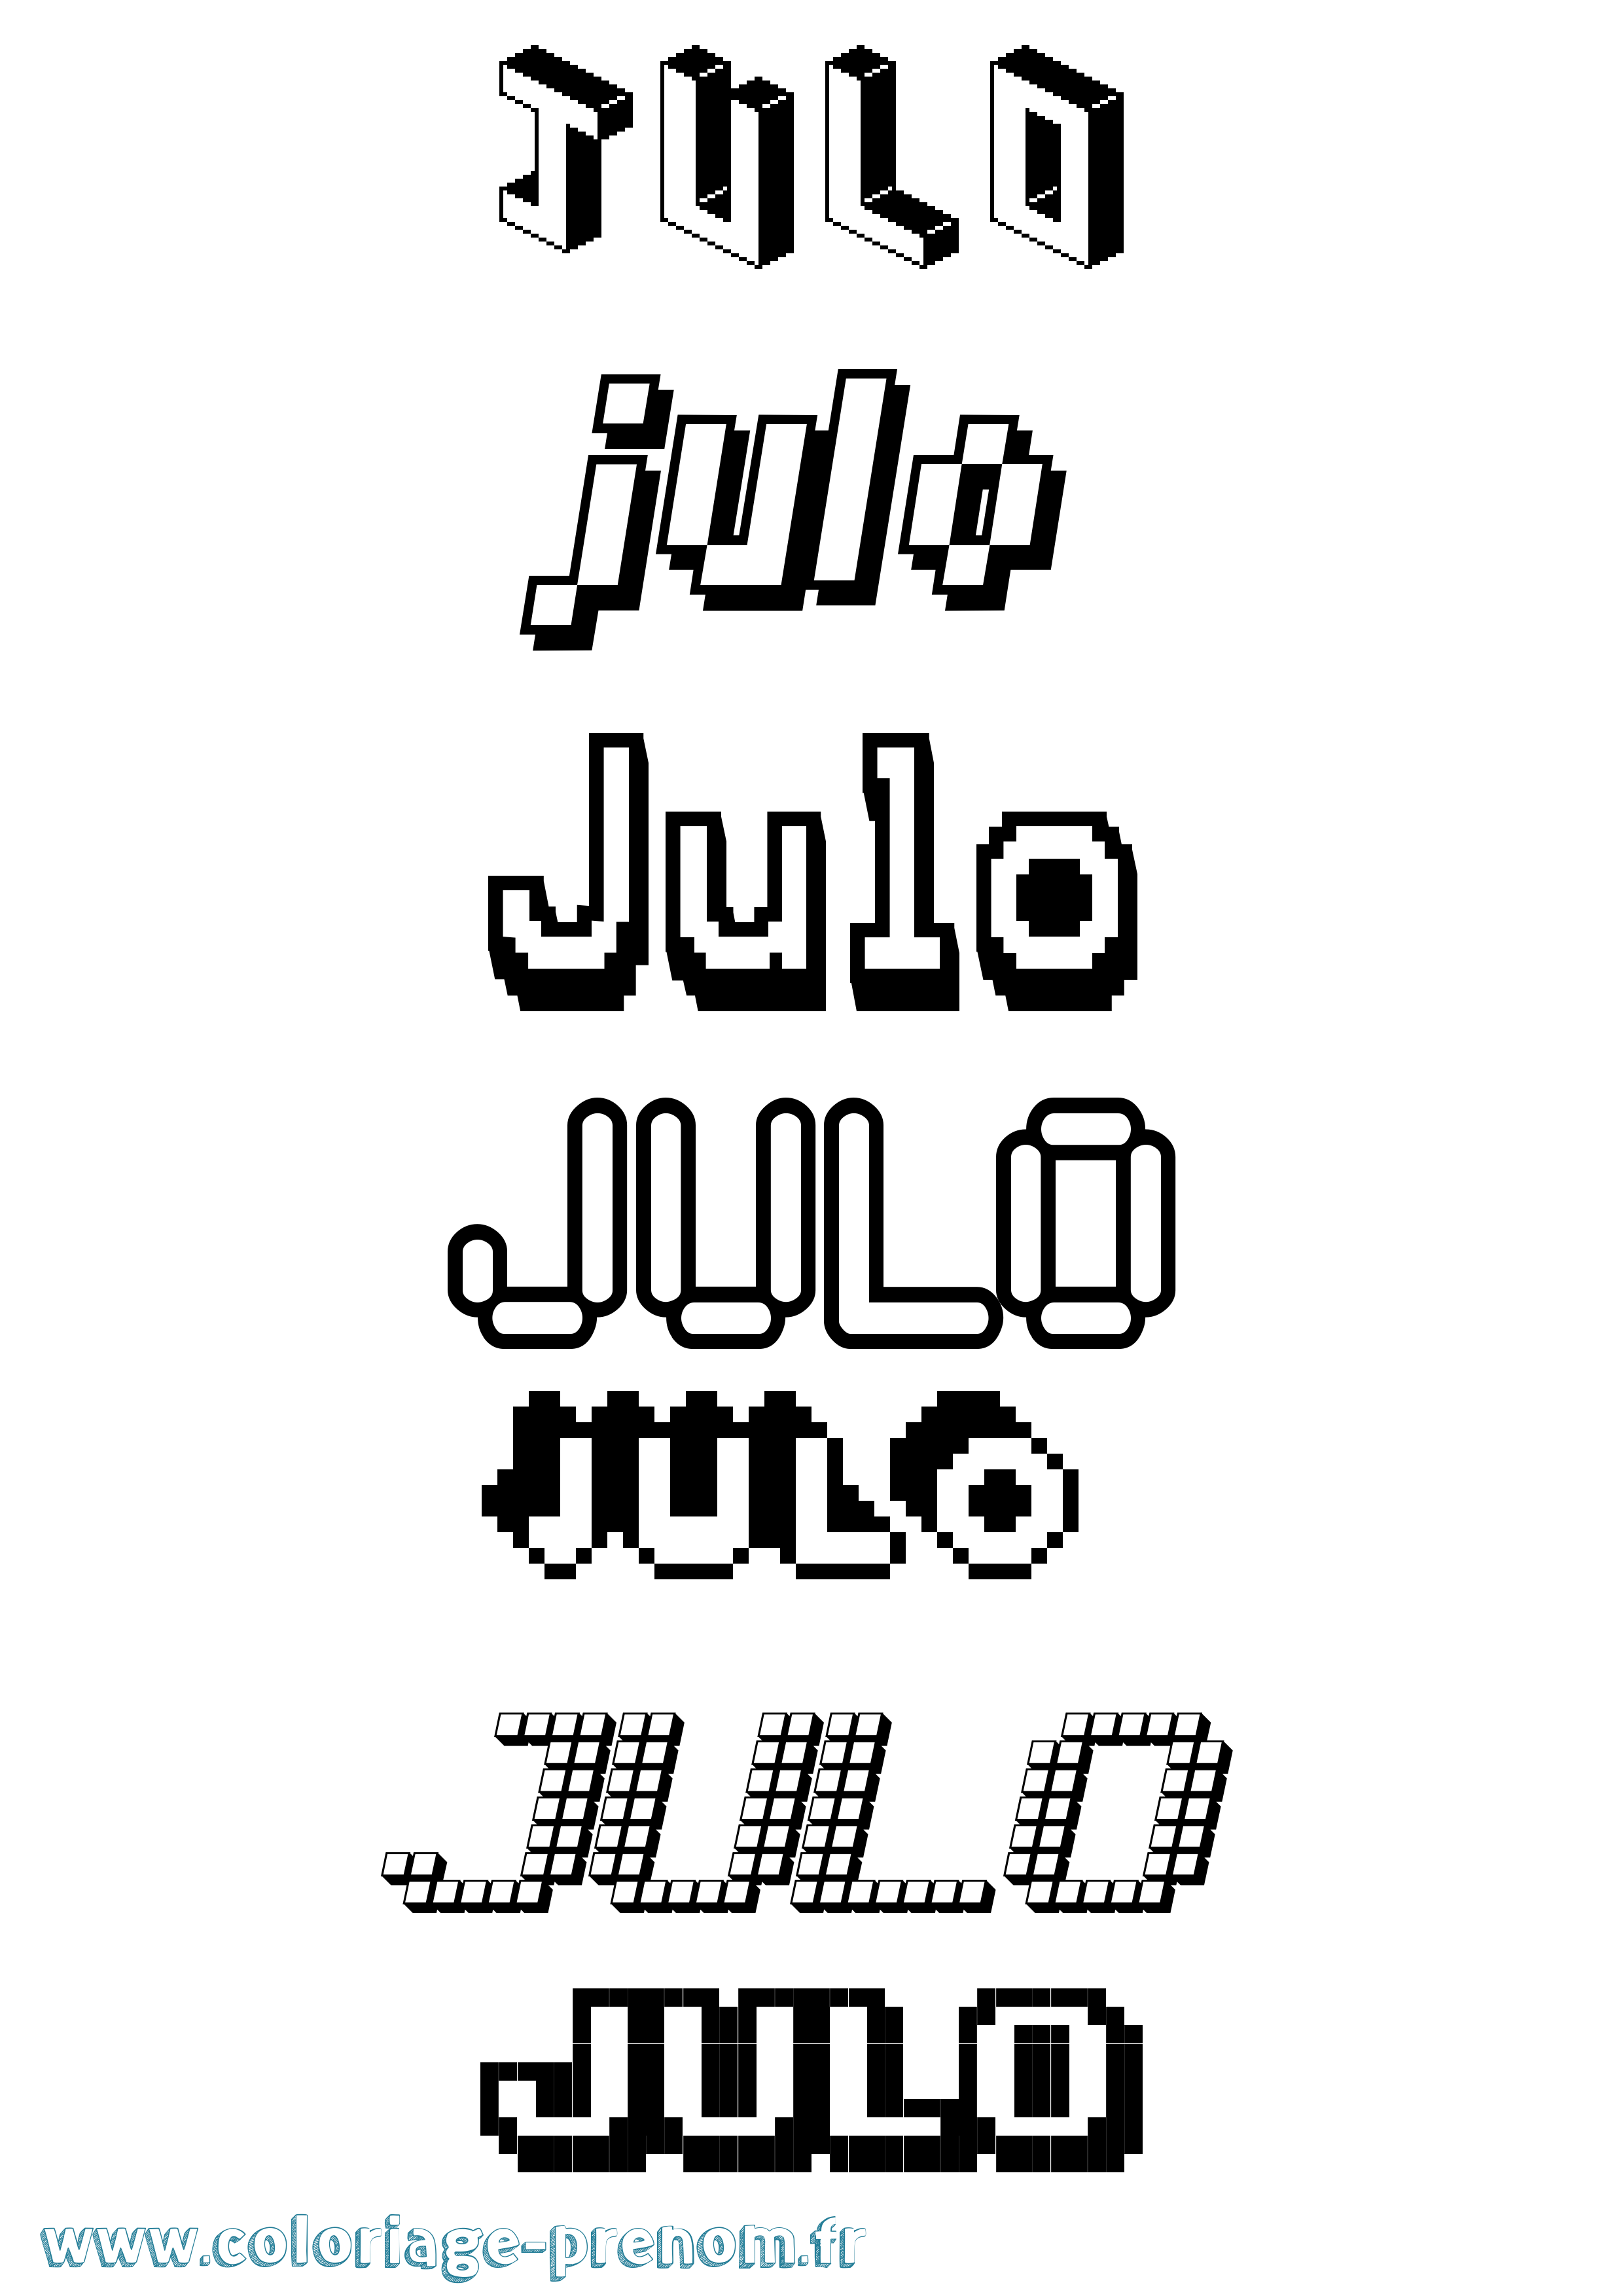 Coloriage prénom Julo Pixel